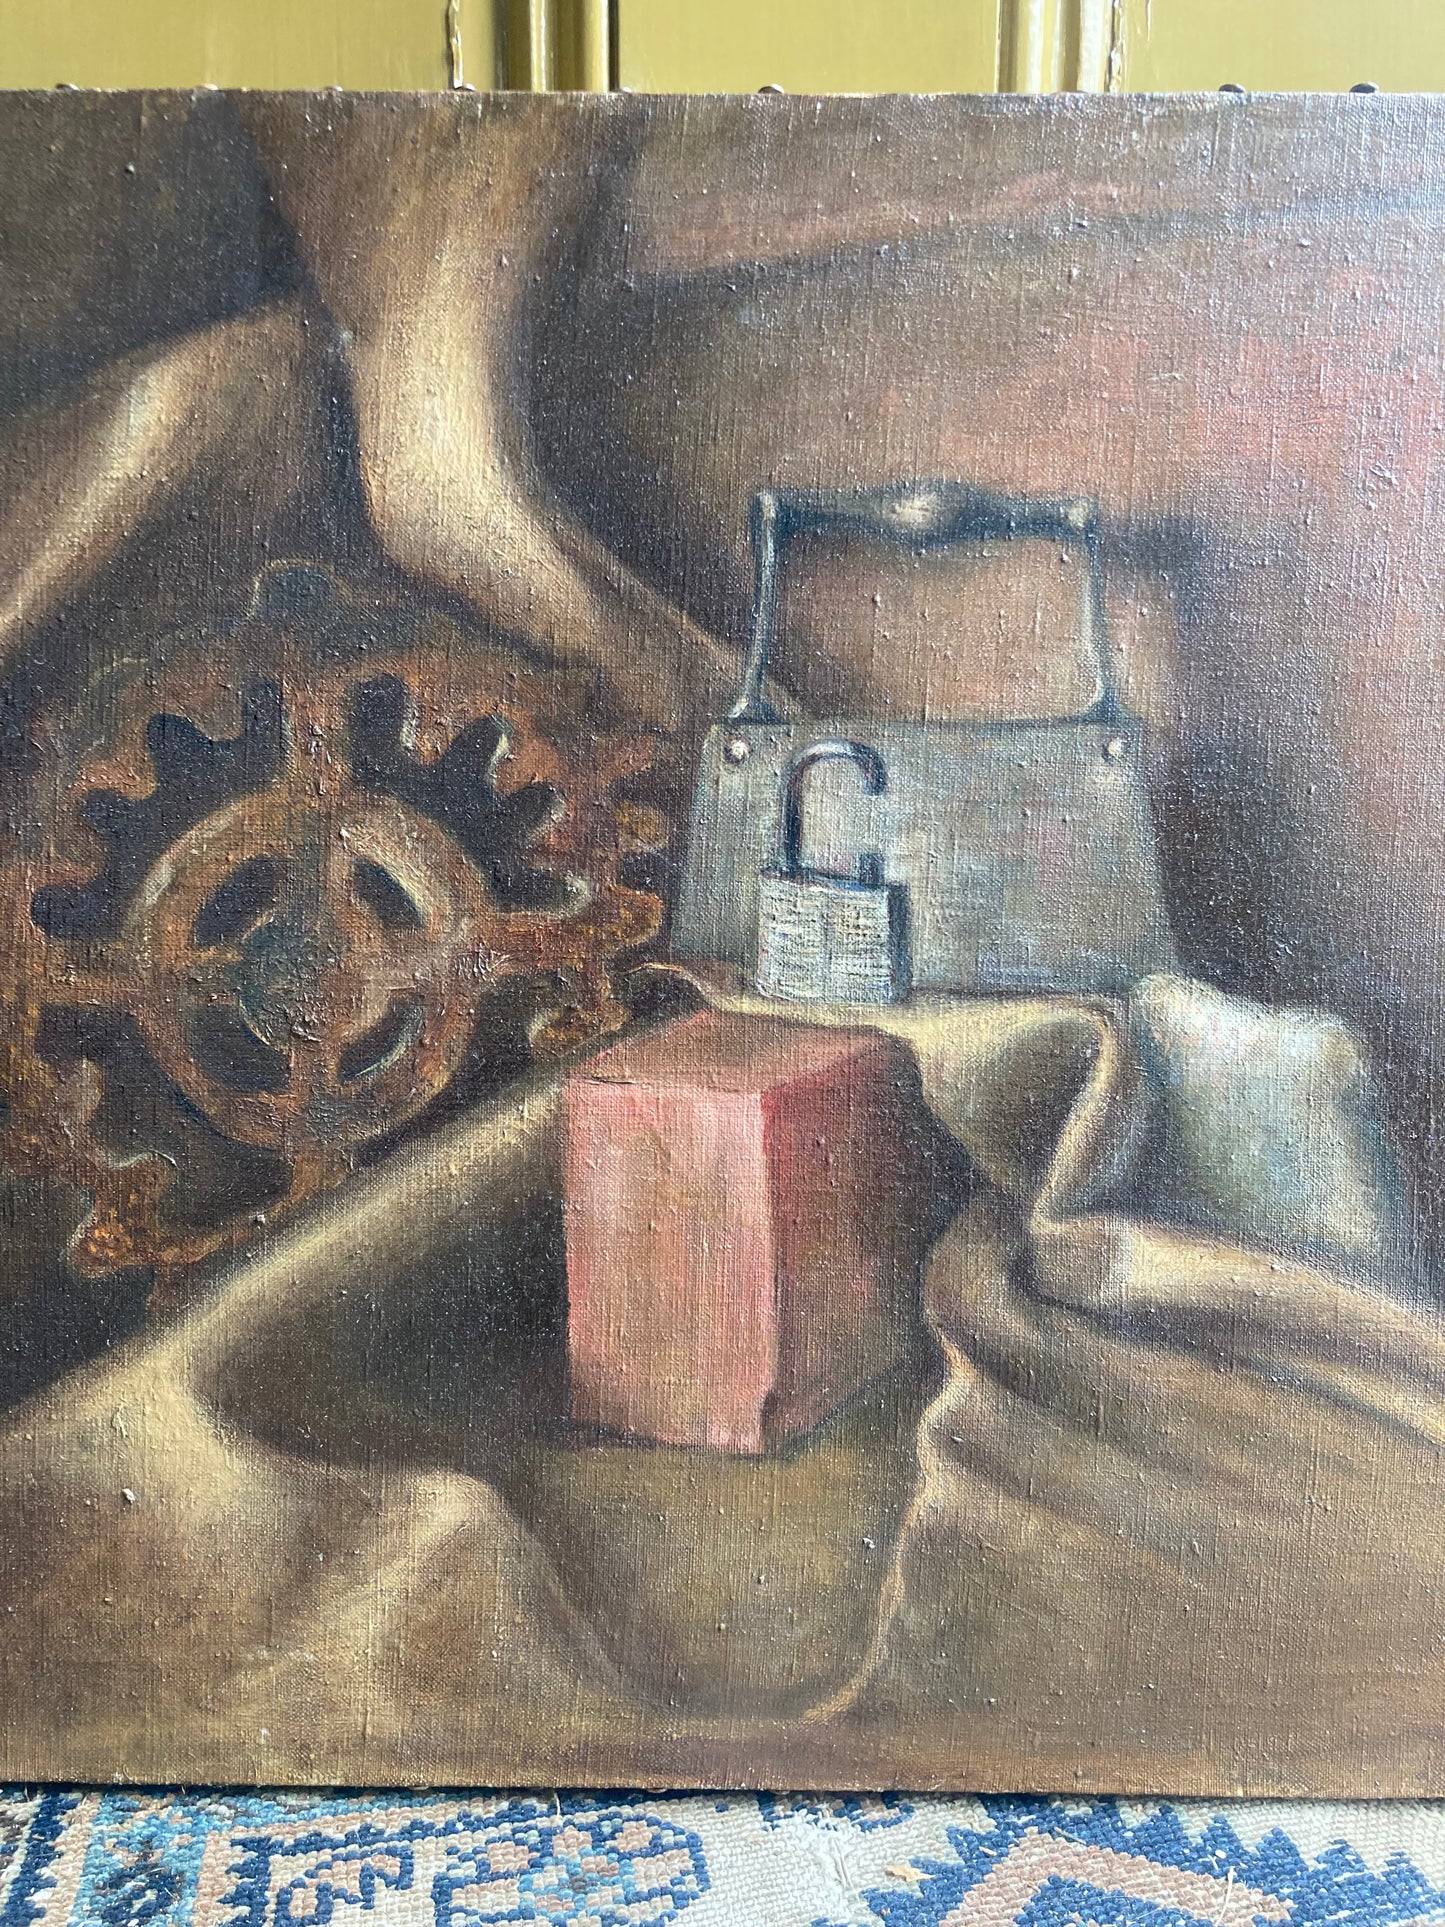 Oil on Canvas Painting, Industrial Still Life of Rusty Gear, Lock, Brick and Mandolin c. 1940 1950, artist signed N. Davis